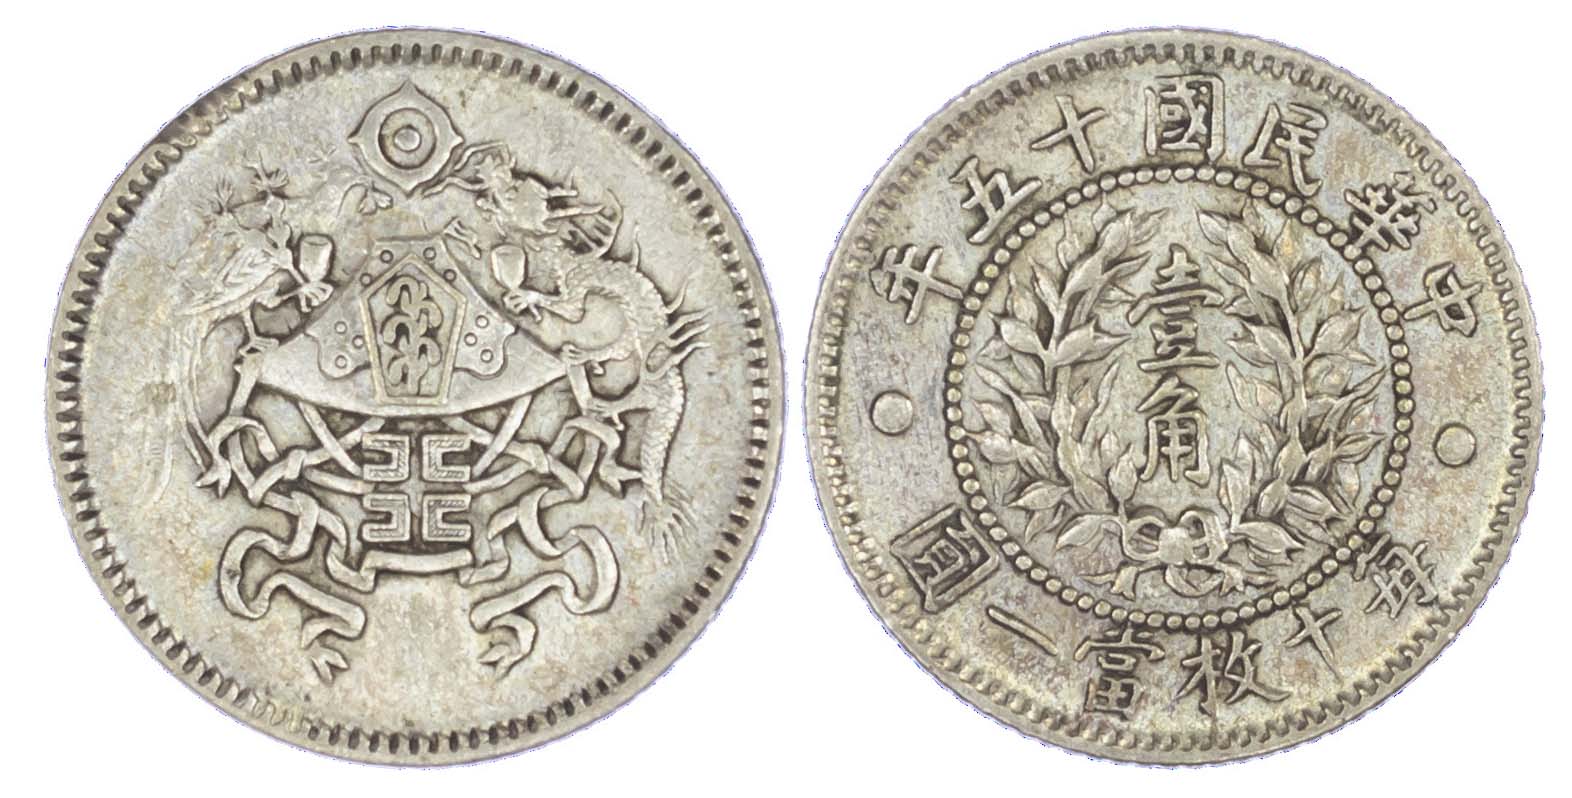 China, Republic, Dragon and Phoenix silver 10 Cents, 1926 - rare